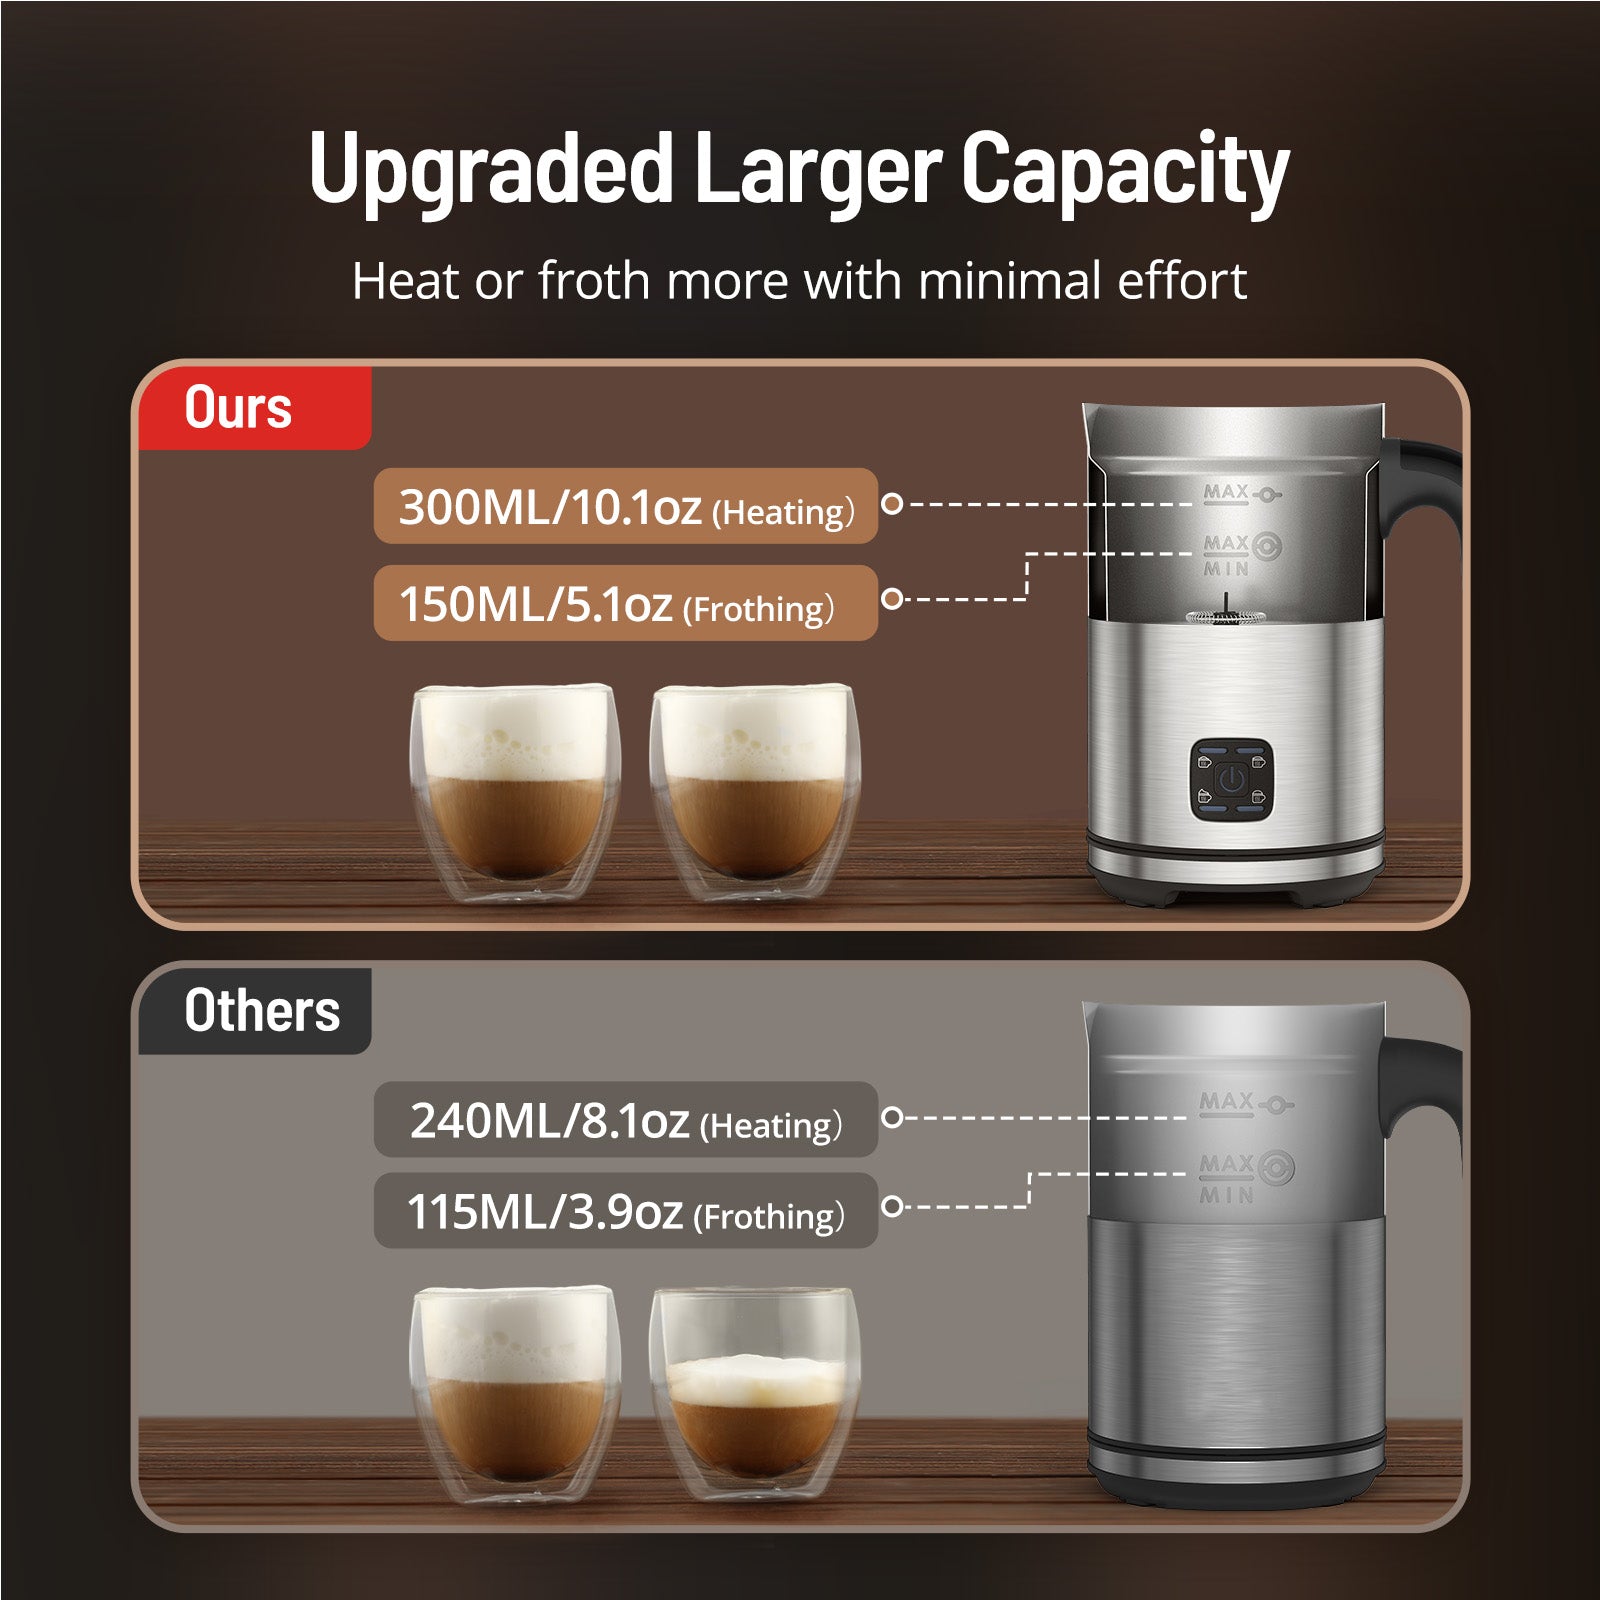 upgraded larger capacity milk steamer